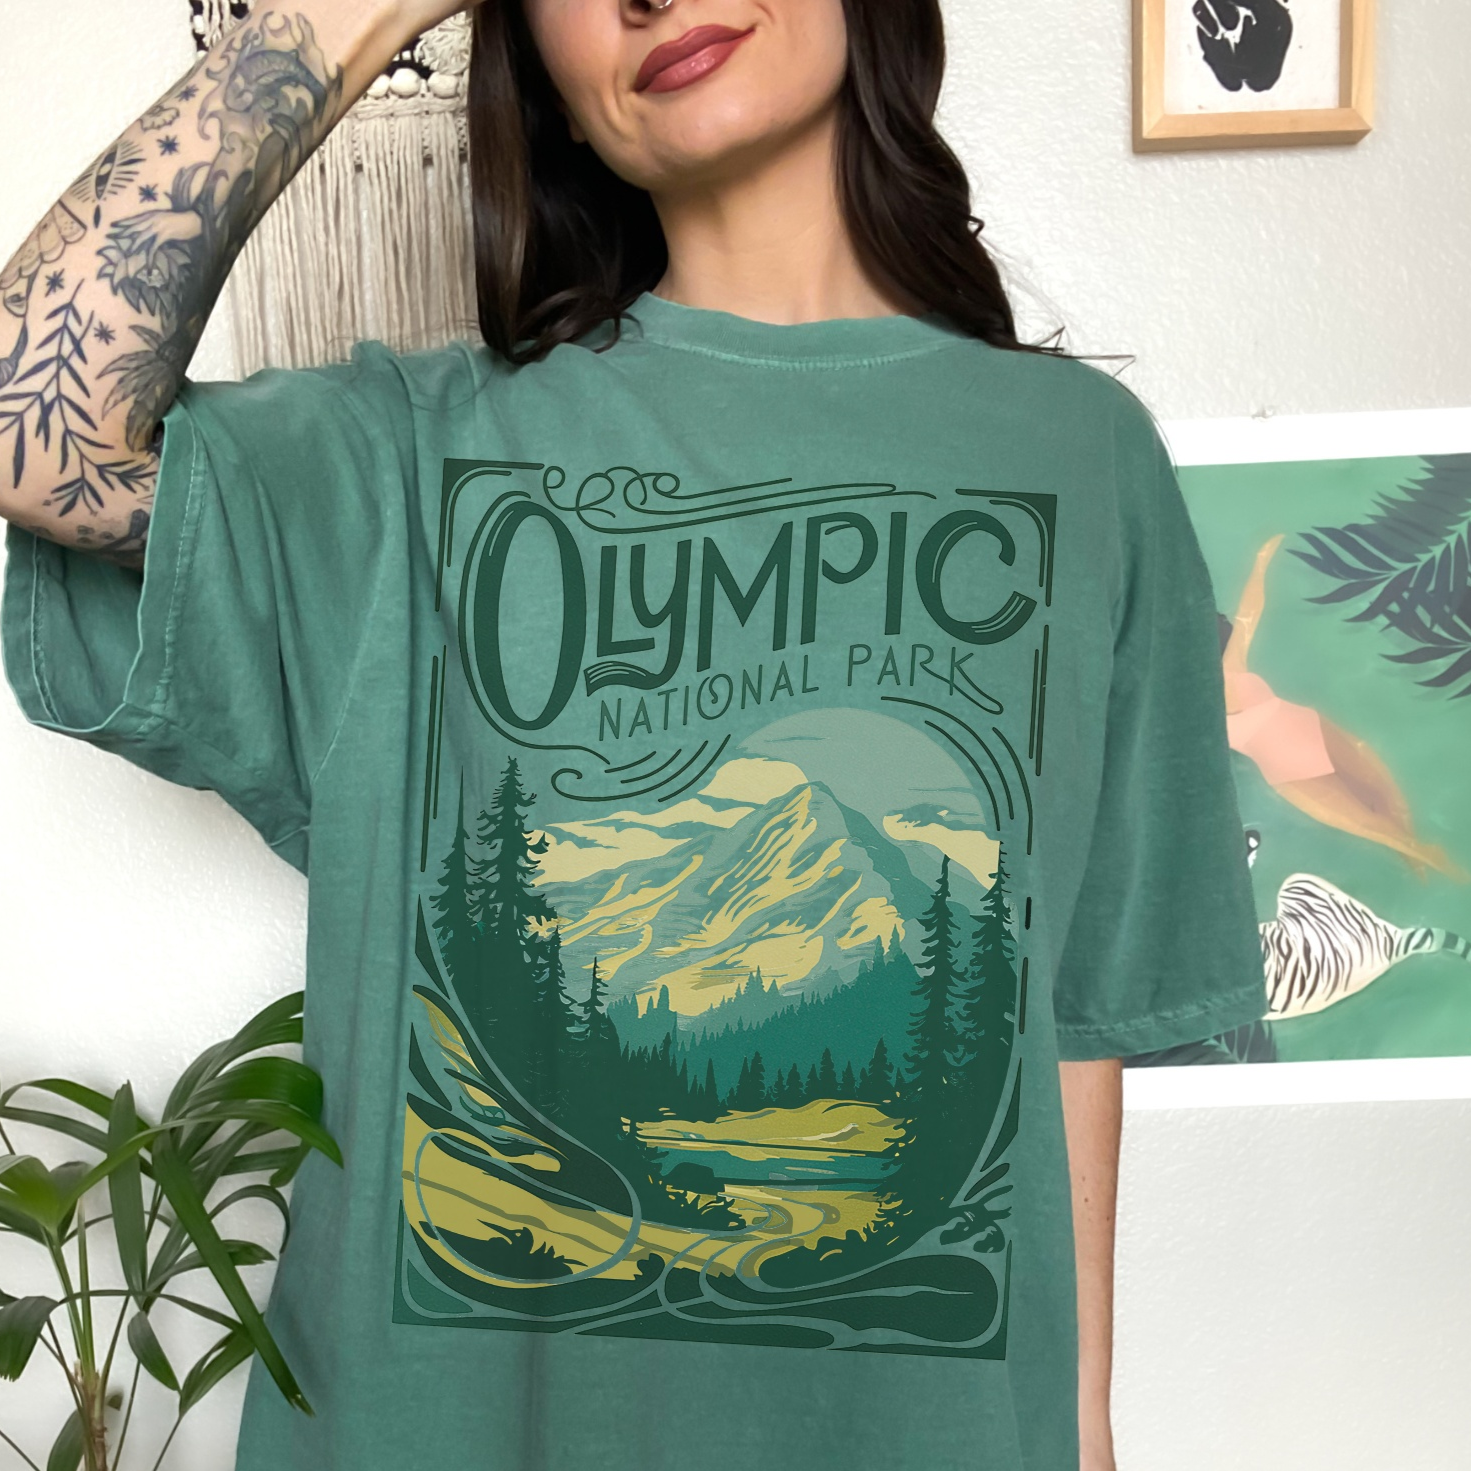 Olympic National Park 1938 Shirt